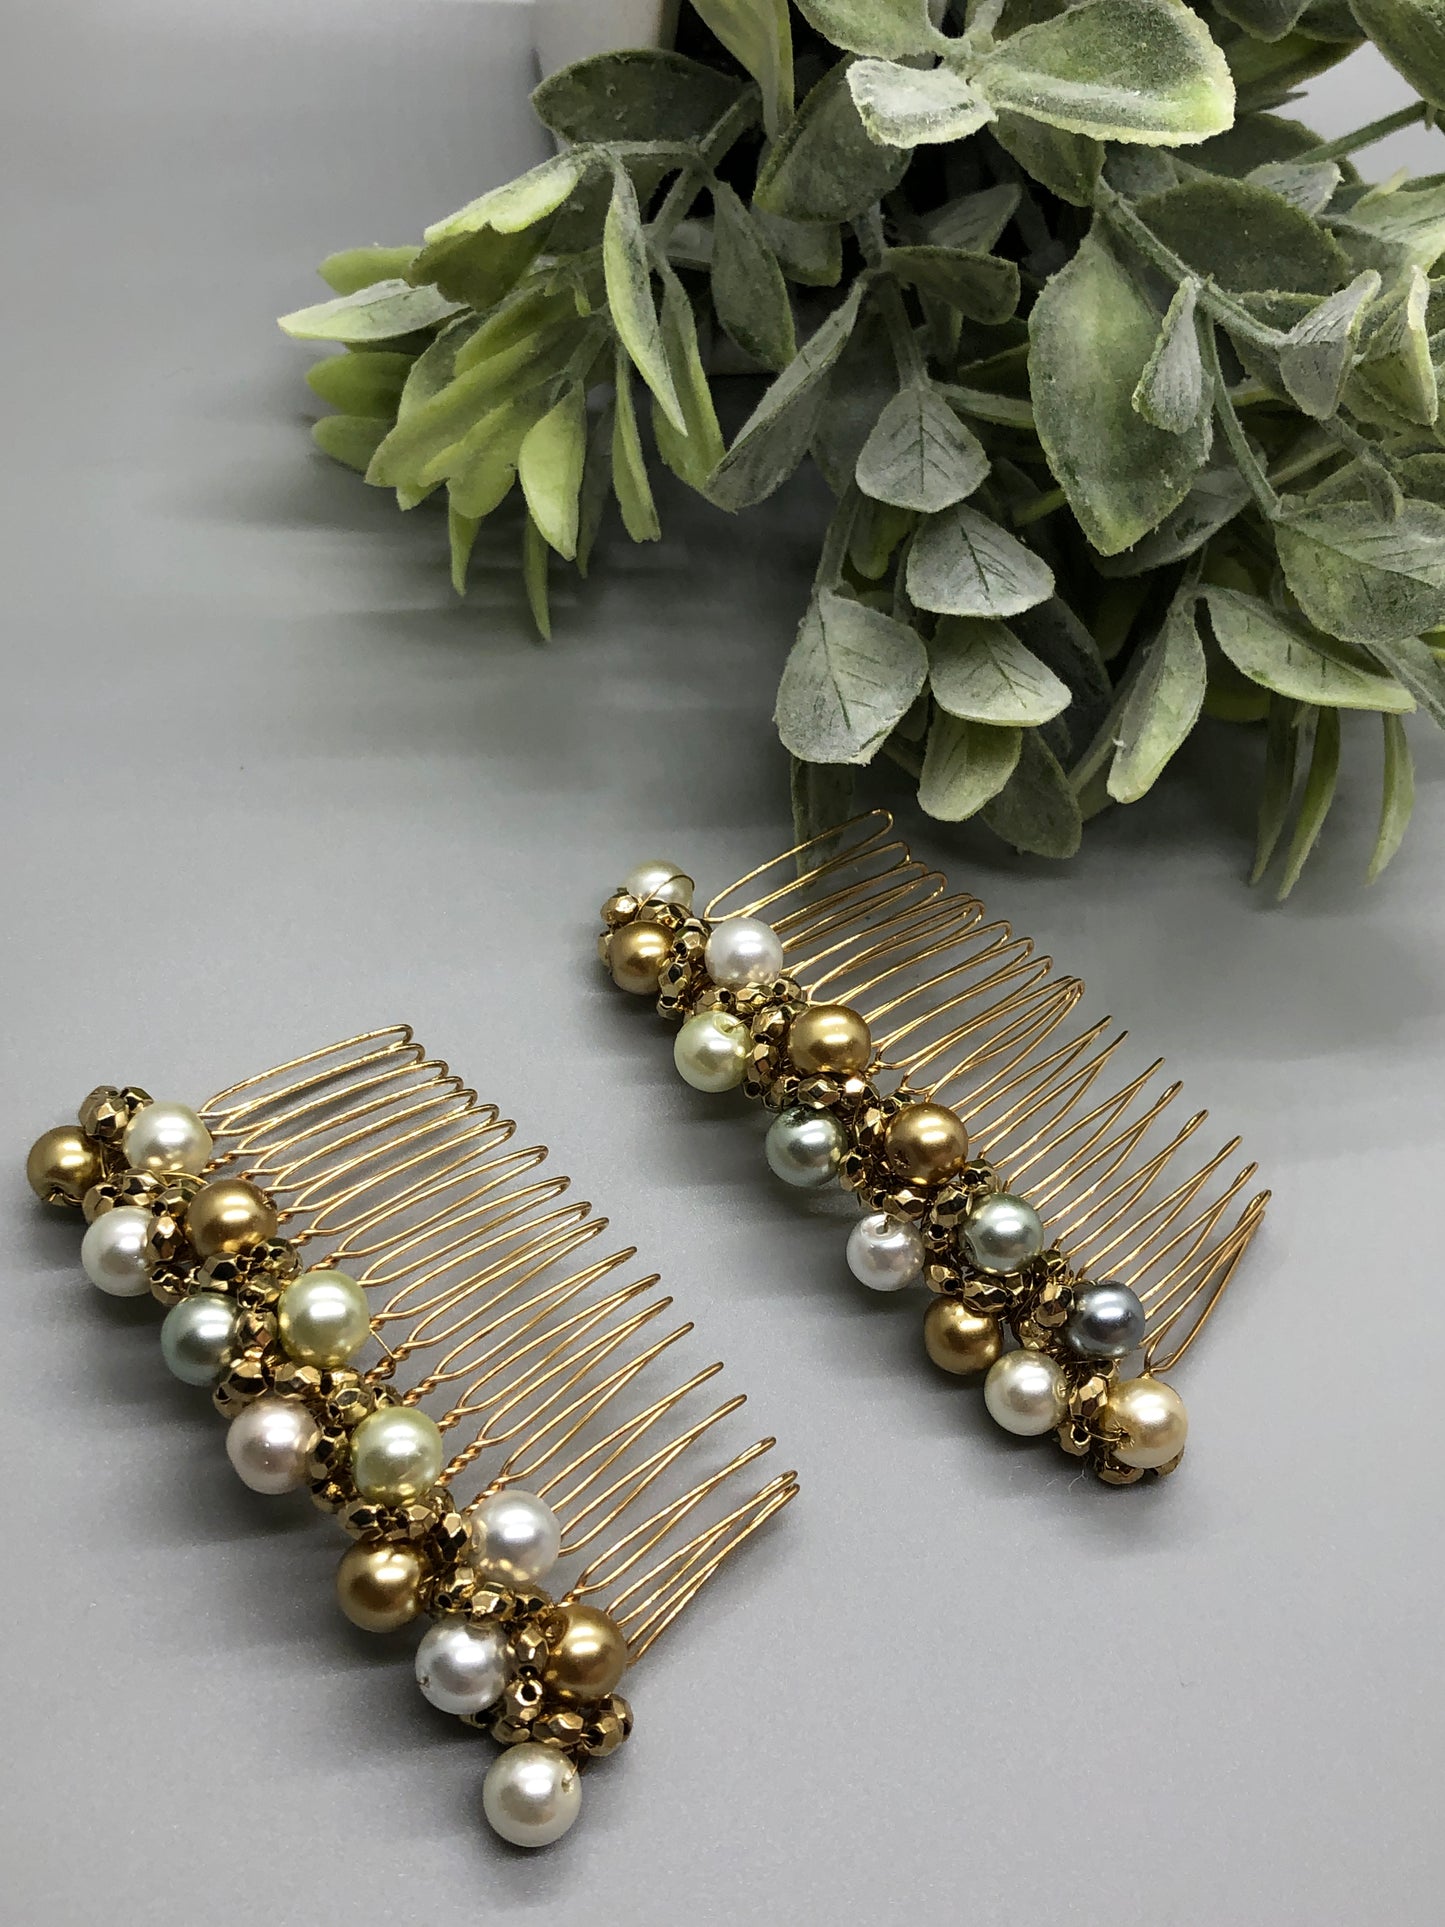 Metallic Gold Beige Gray White Beaded Hair Comb 3.5'' Gold Tone Comb 2pc set Retro Bridal Prom Wedding Party